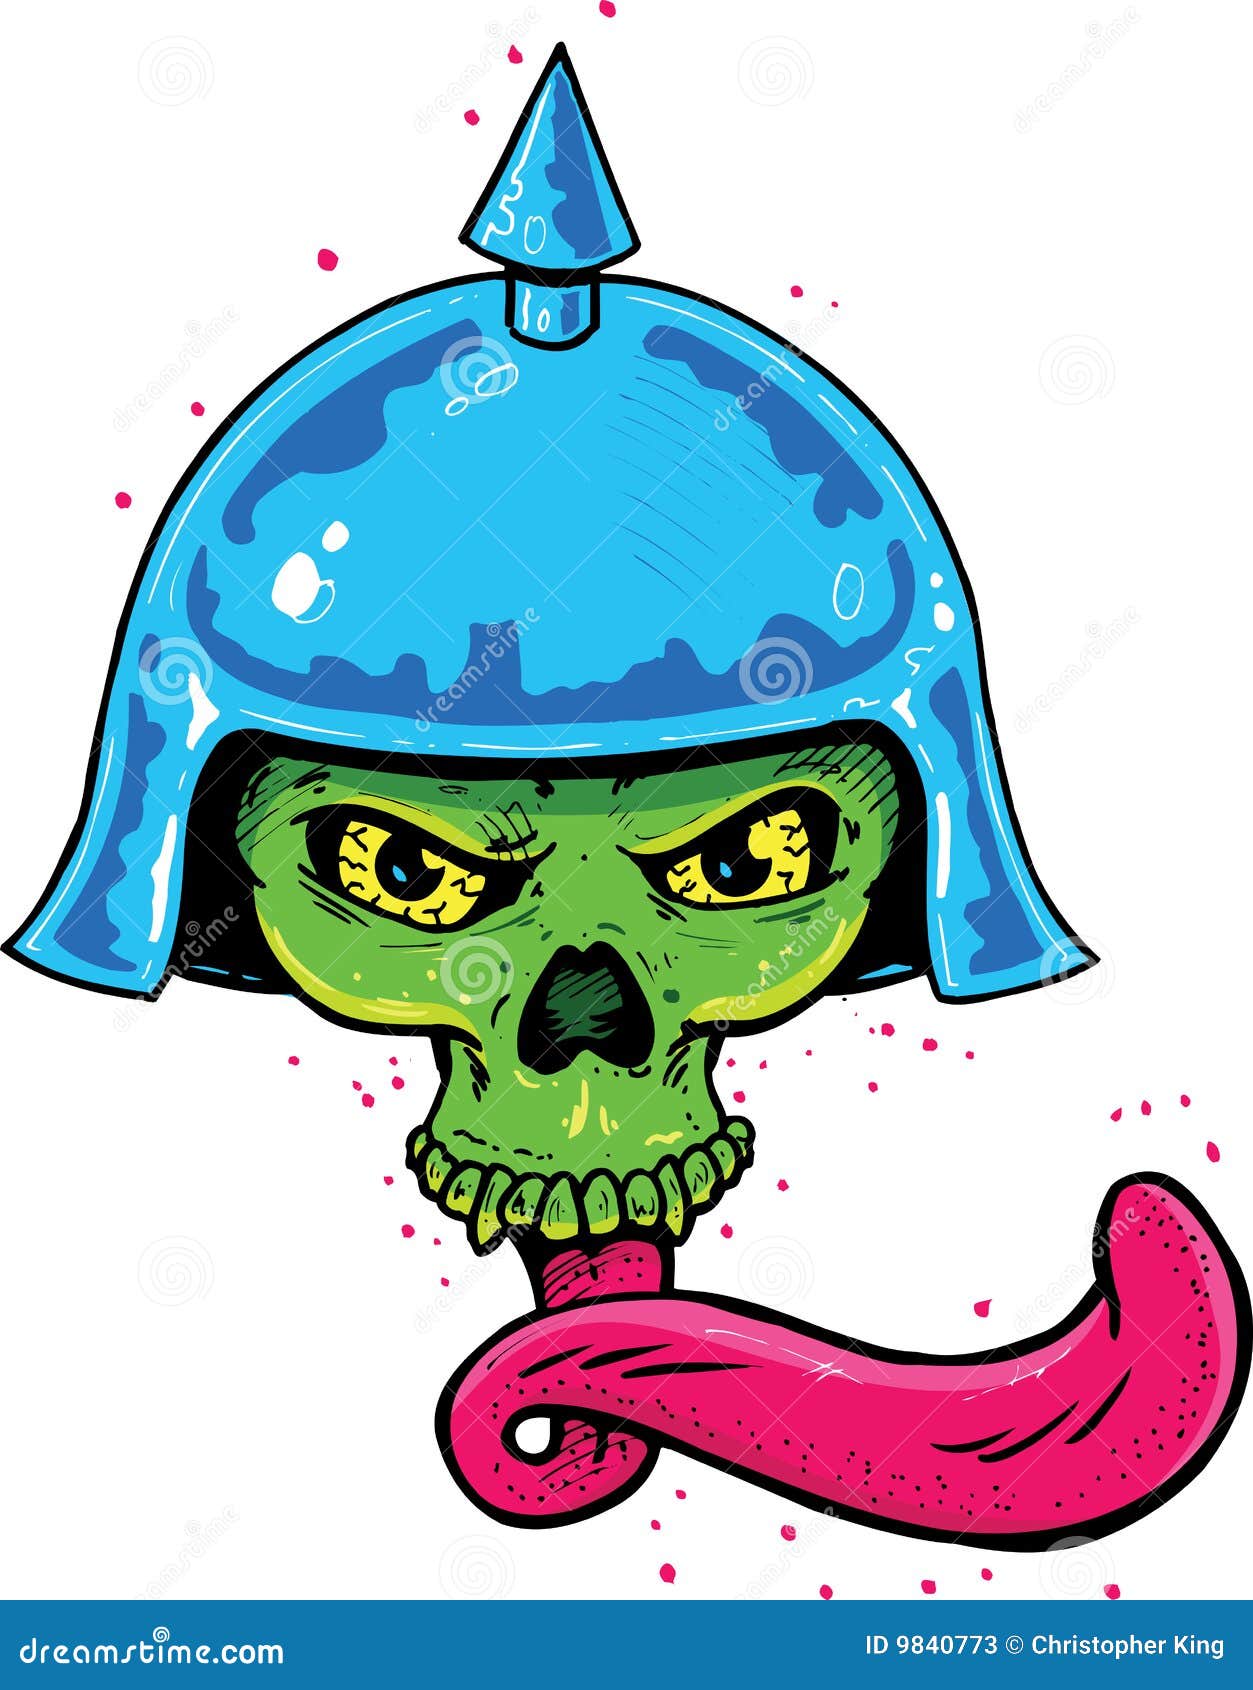 skull with motorcycle helmet tattoo design on Craiyon